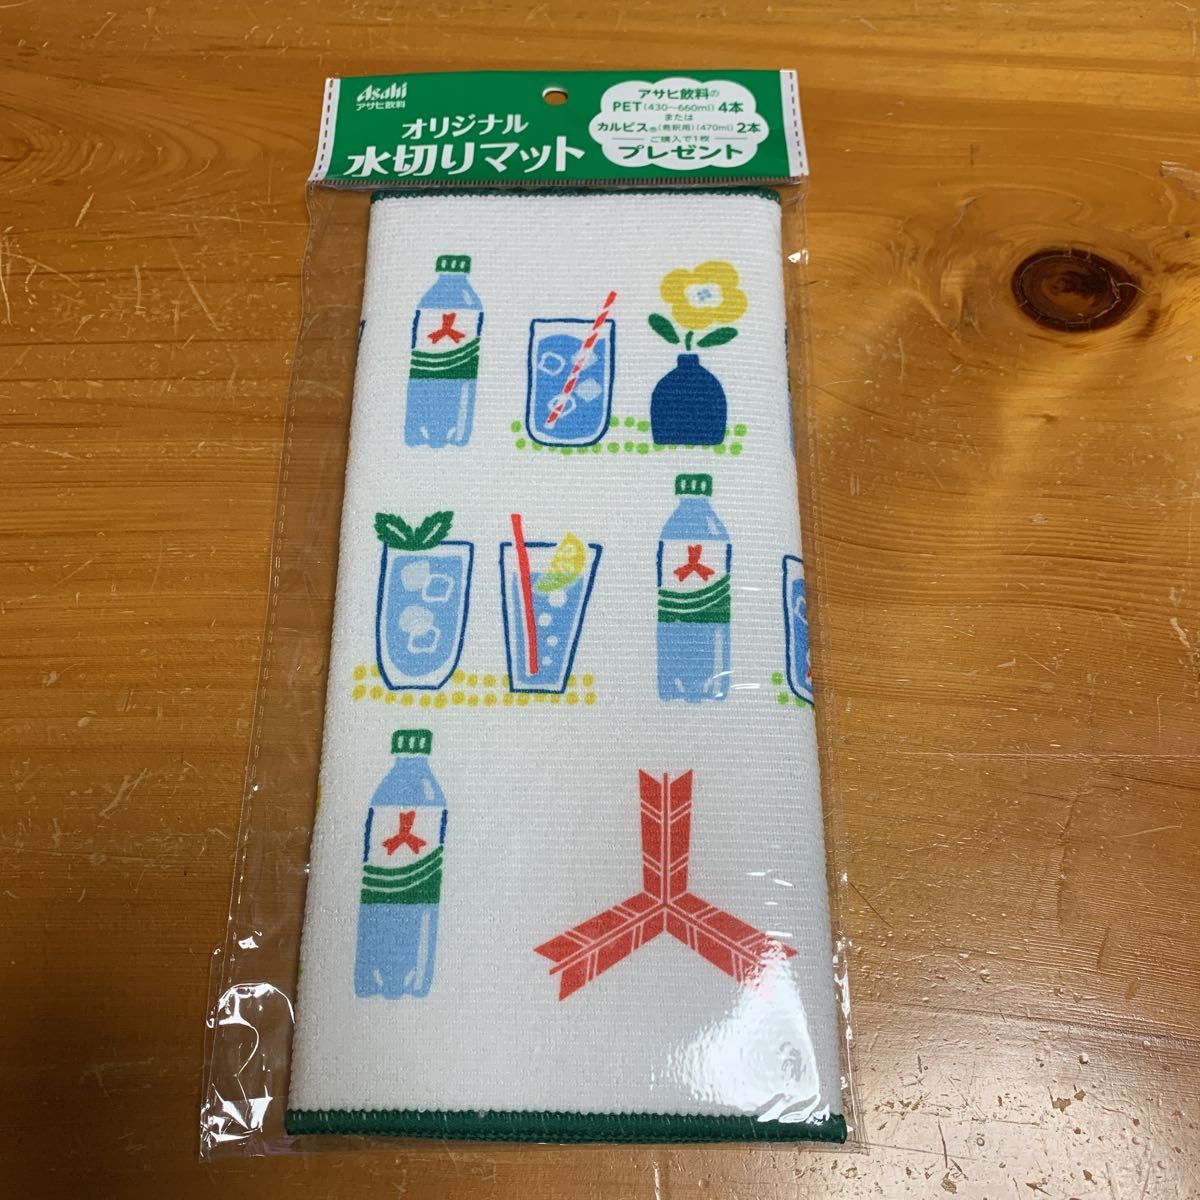 Asahi カルピスオリジナル 水切りマット アサヒ飲料 ノベリティ 非売品 新品 未開封品 送料無料_画像1